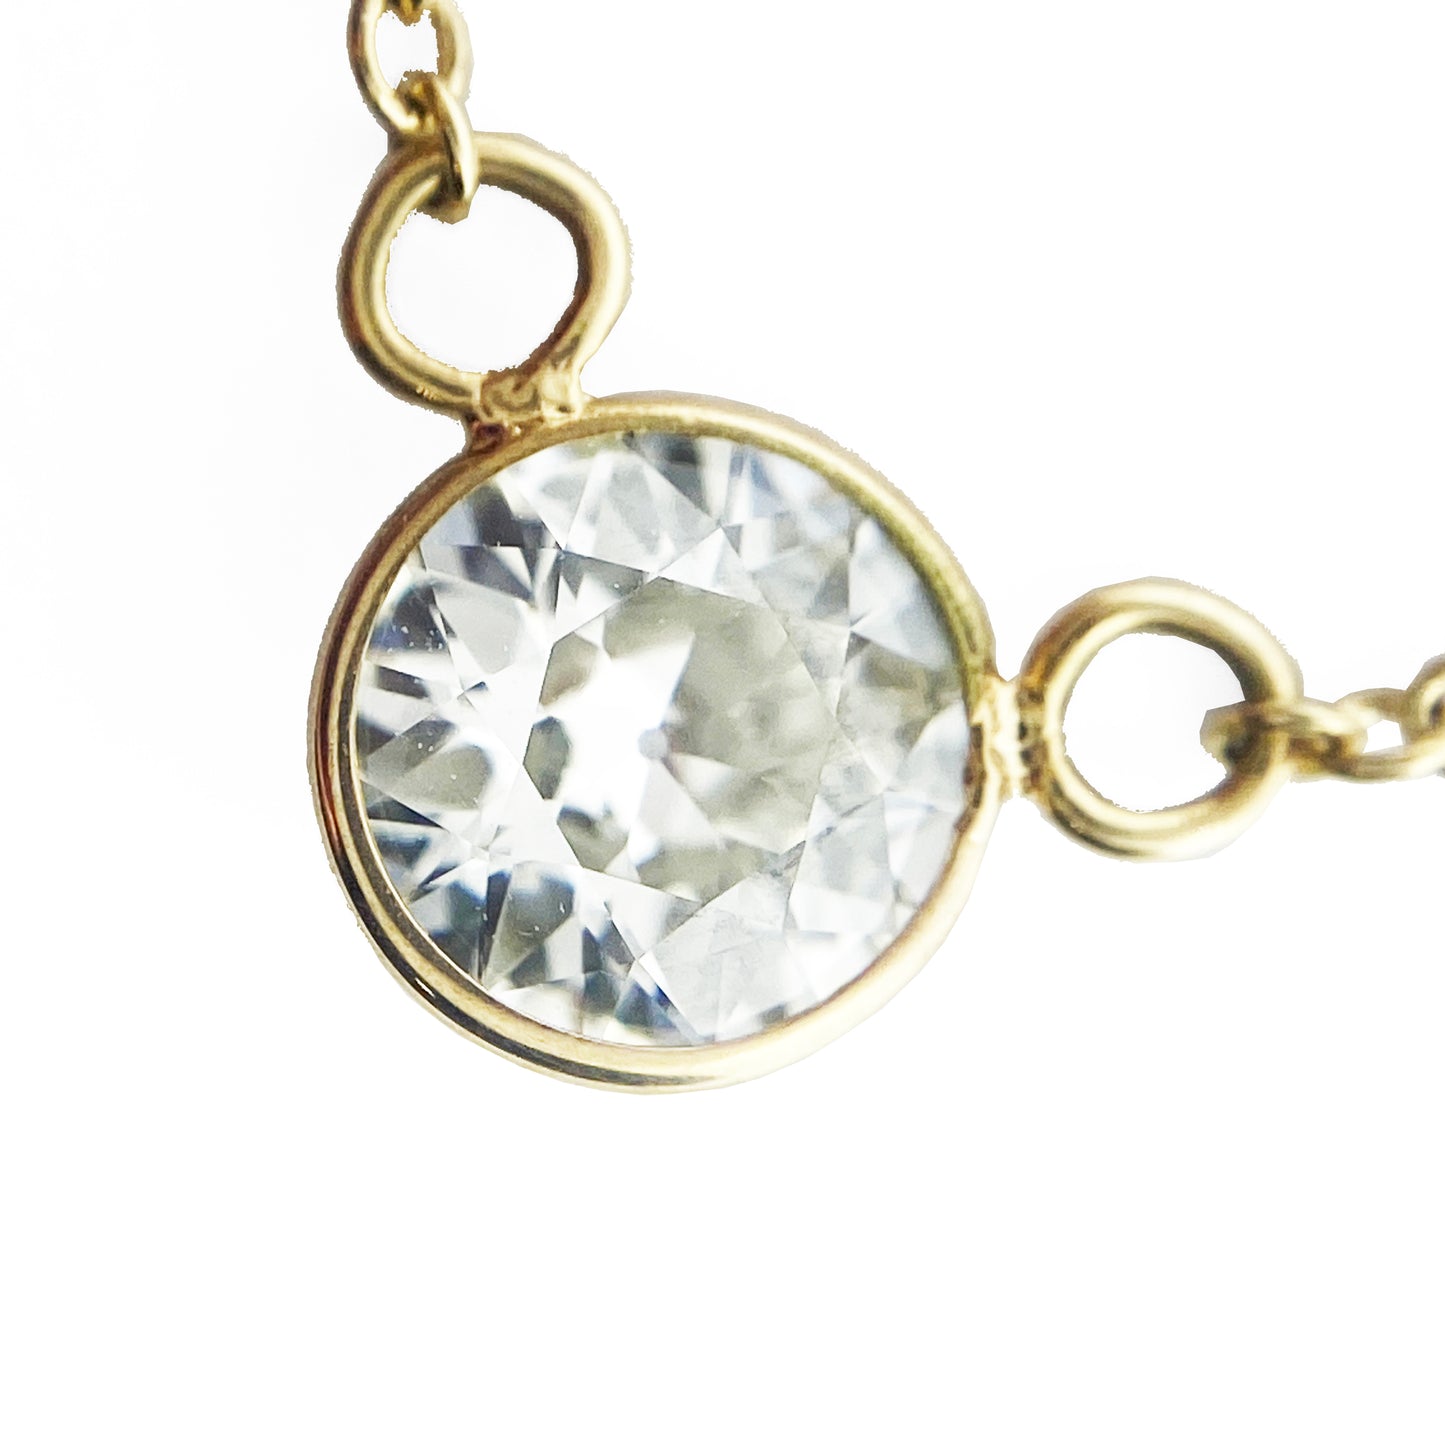 14ky Solitaire Diamond Necklace 0.47ct - eklektic jewelry studio